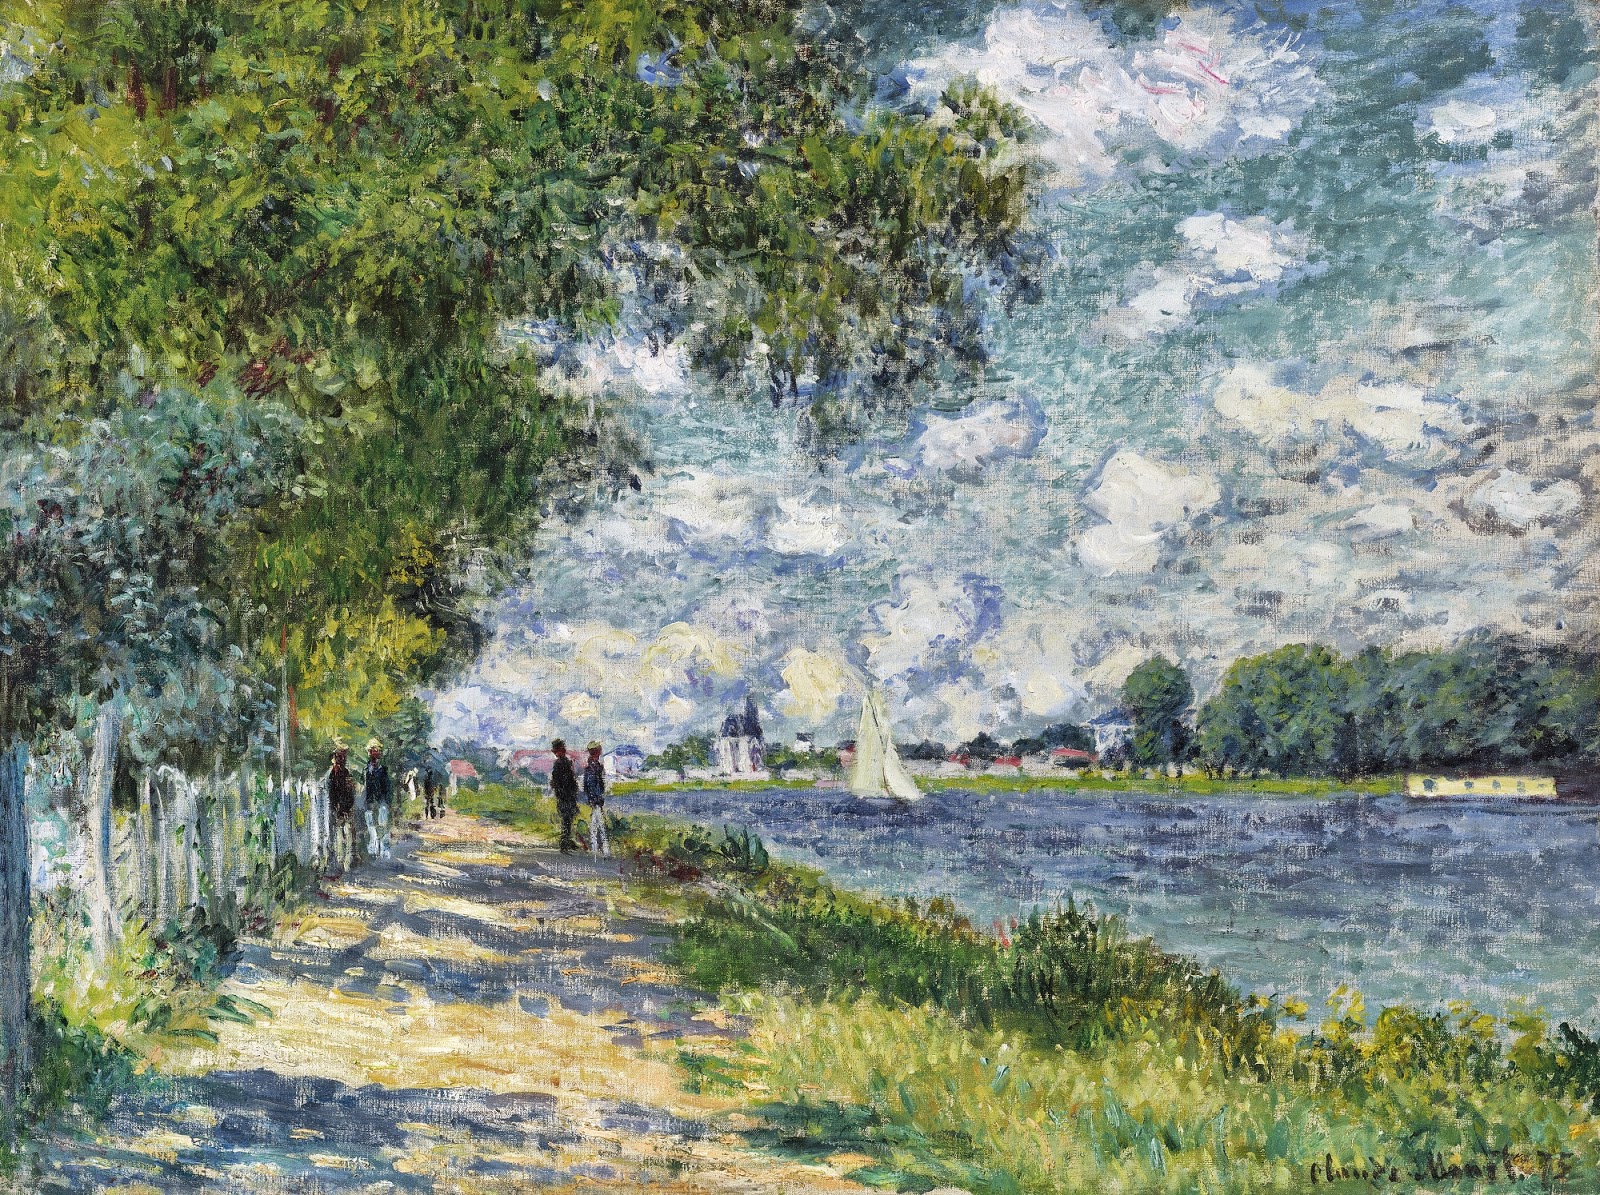 Claude+Monet-1840-1926 (506).jpg